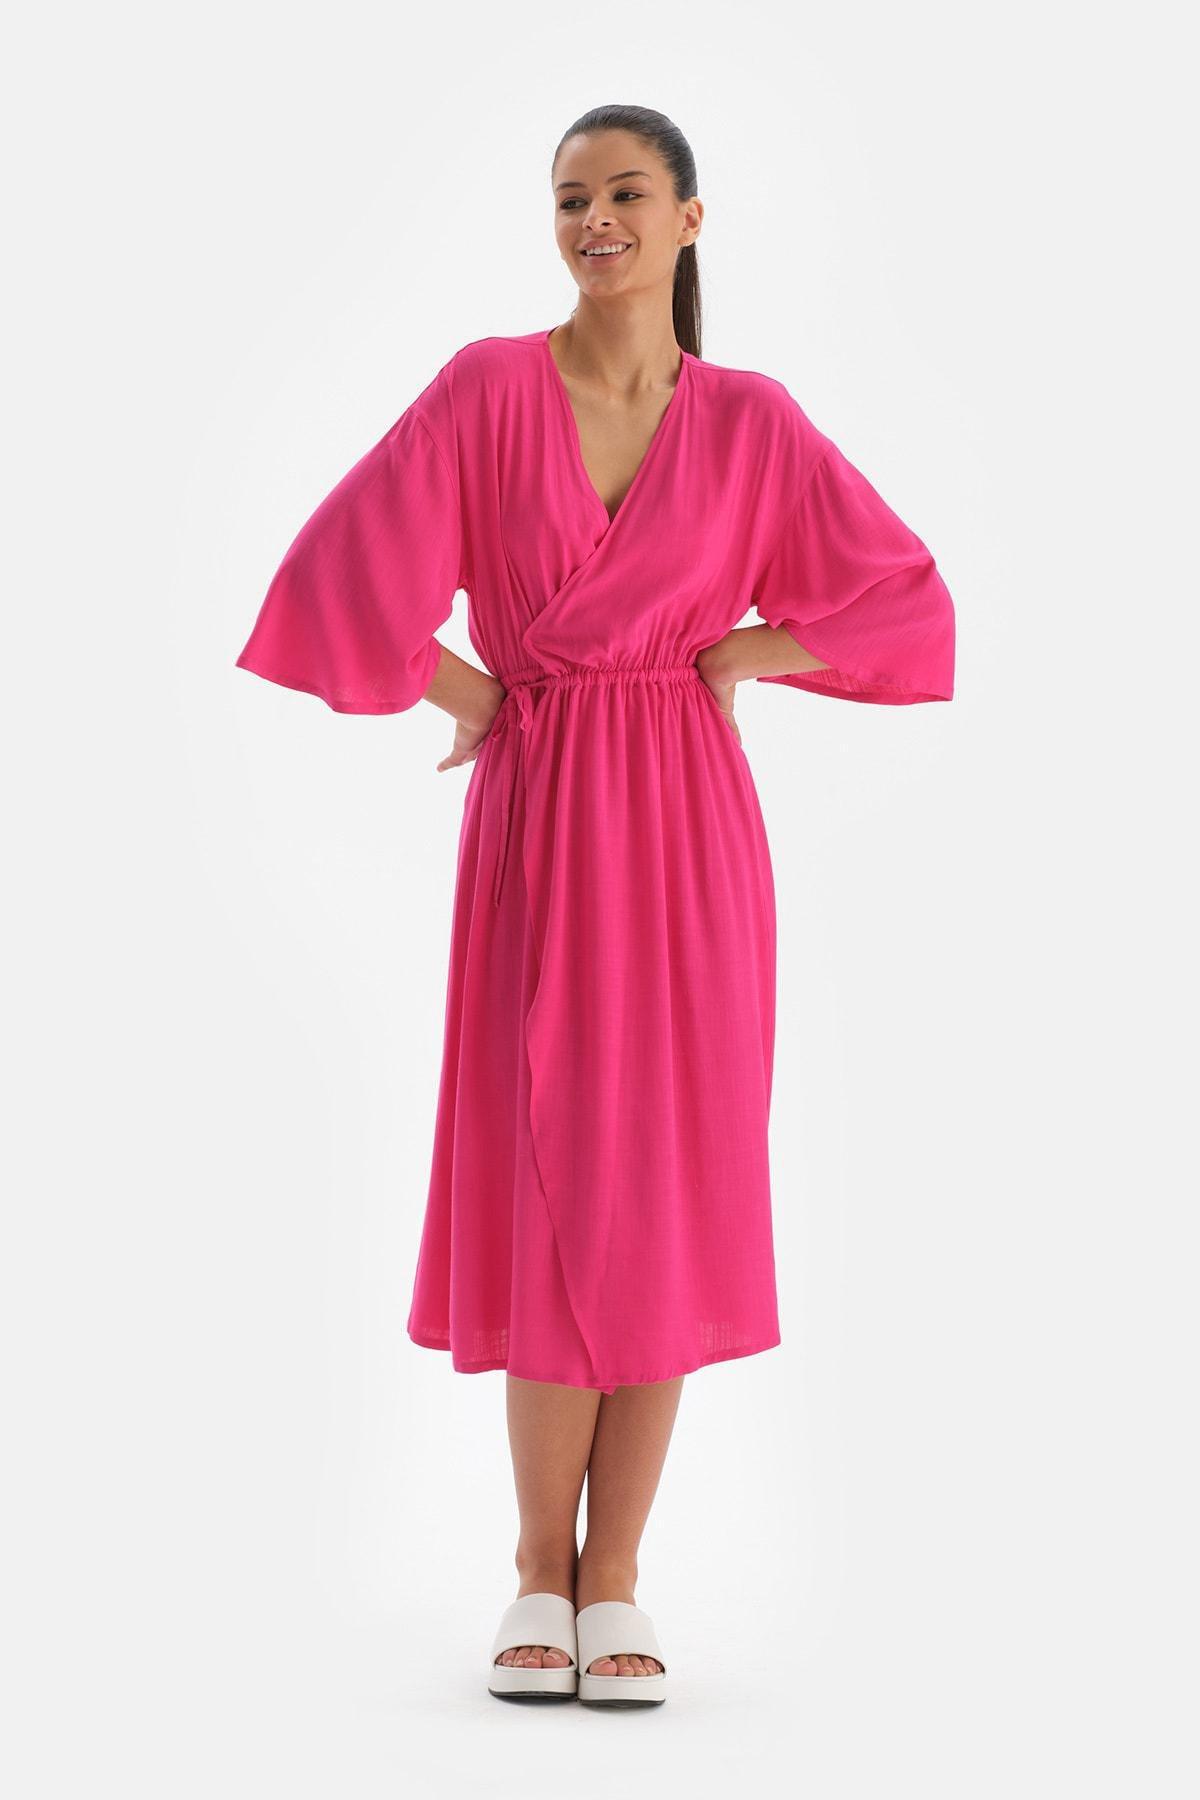 Dagi - Pink Robe Dress